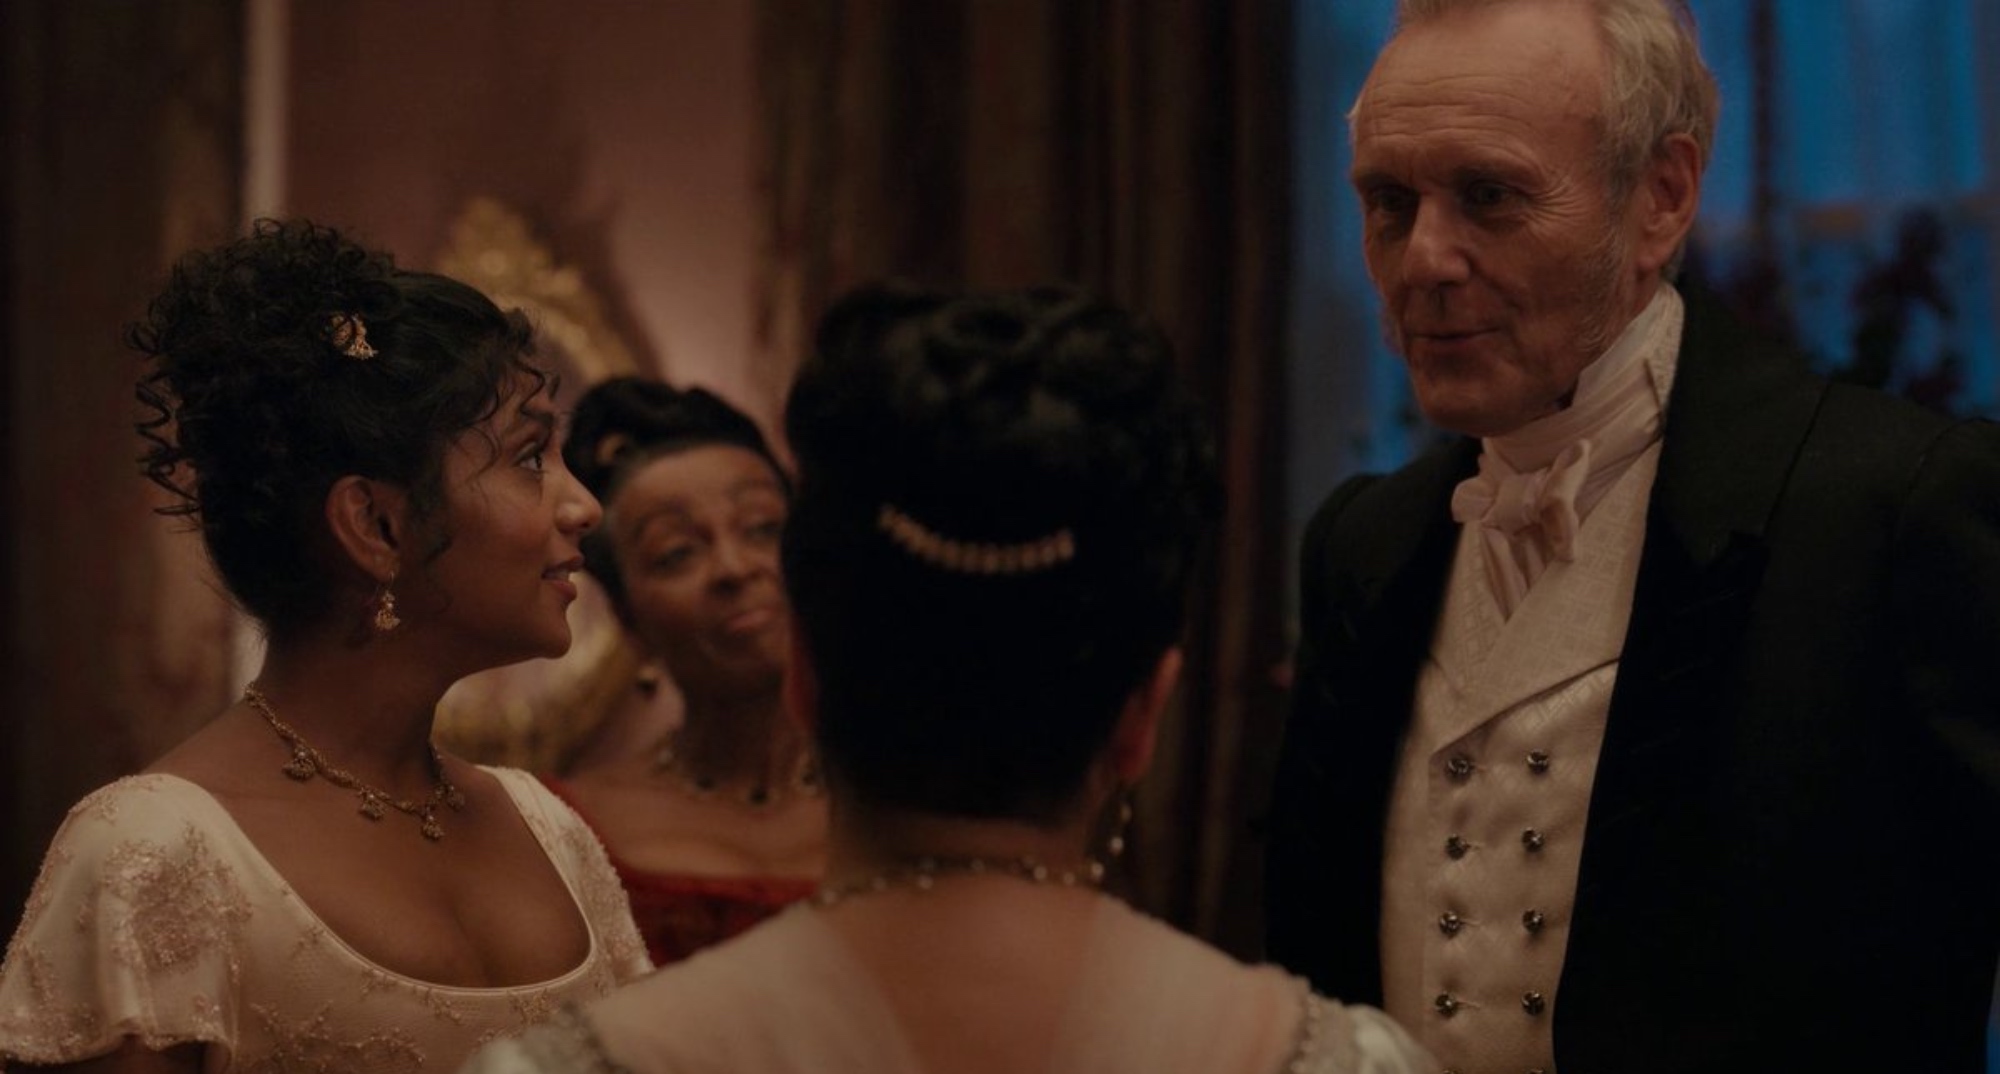 Lady and Lord Sheffield in 'Bridgerton' Season 2 talking to Edwina.